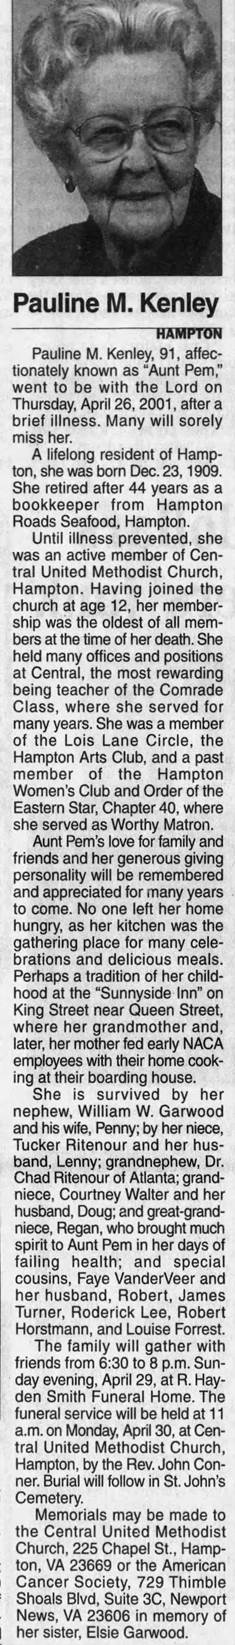 Obituary for Pauline M. Kenley